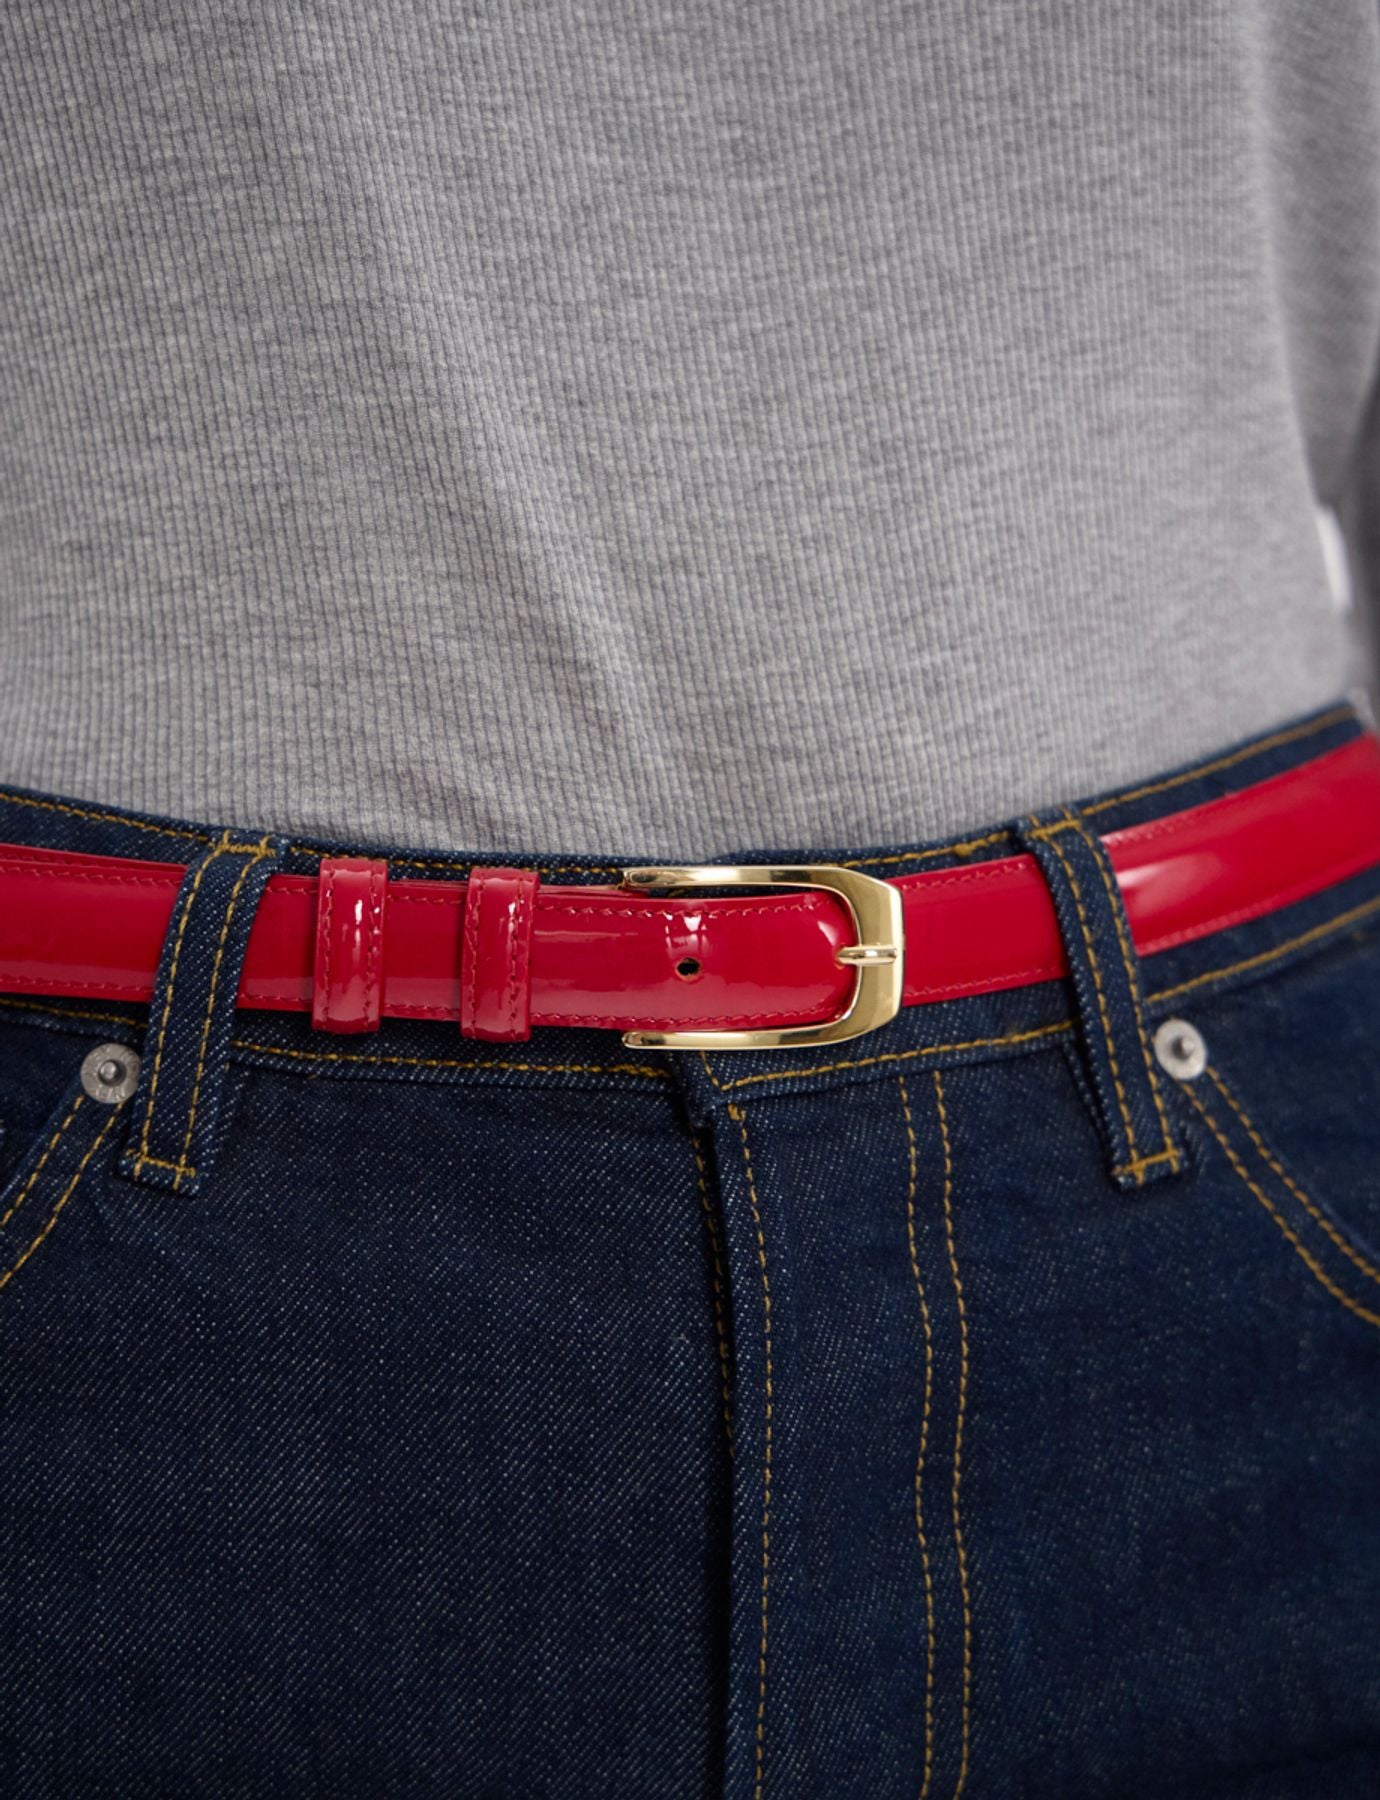 belt-aurelia-leather-varnish-red